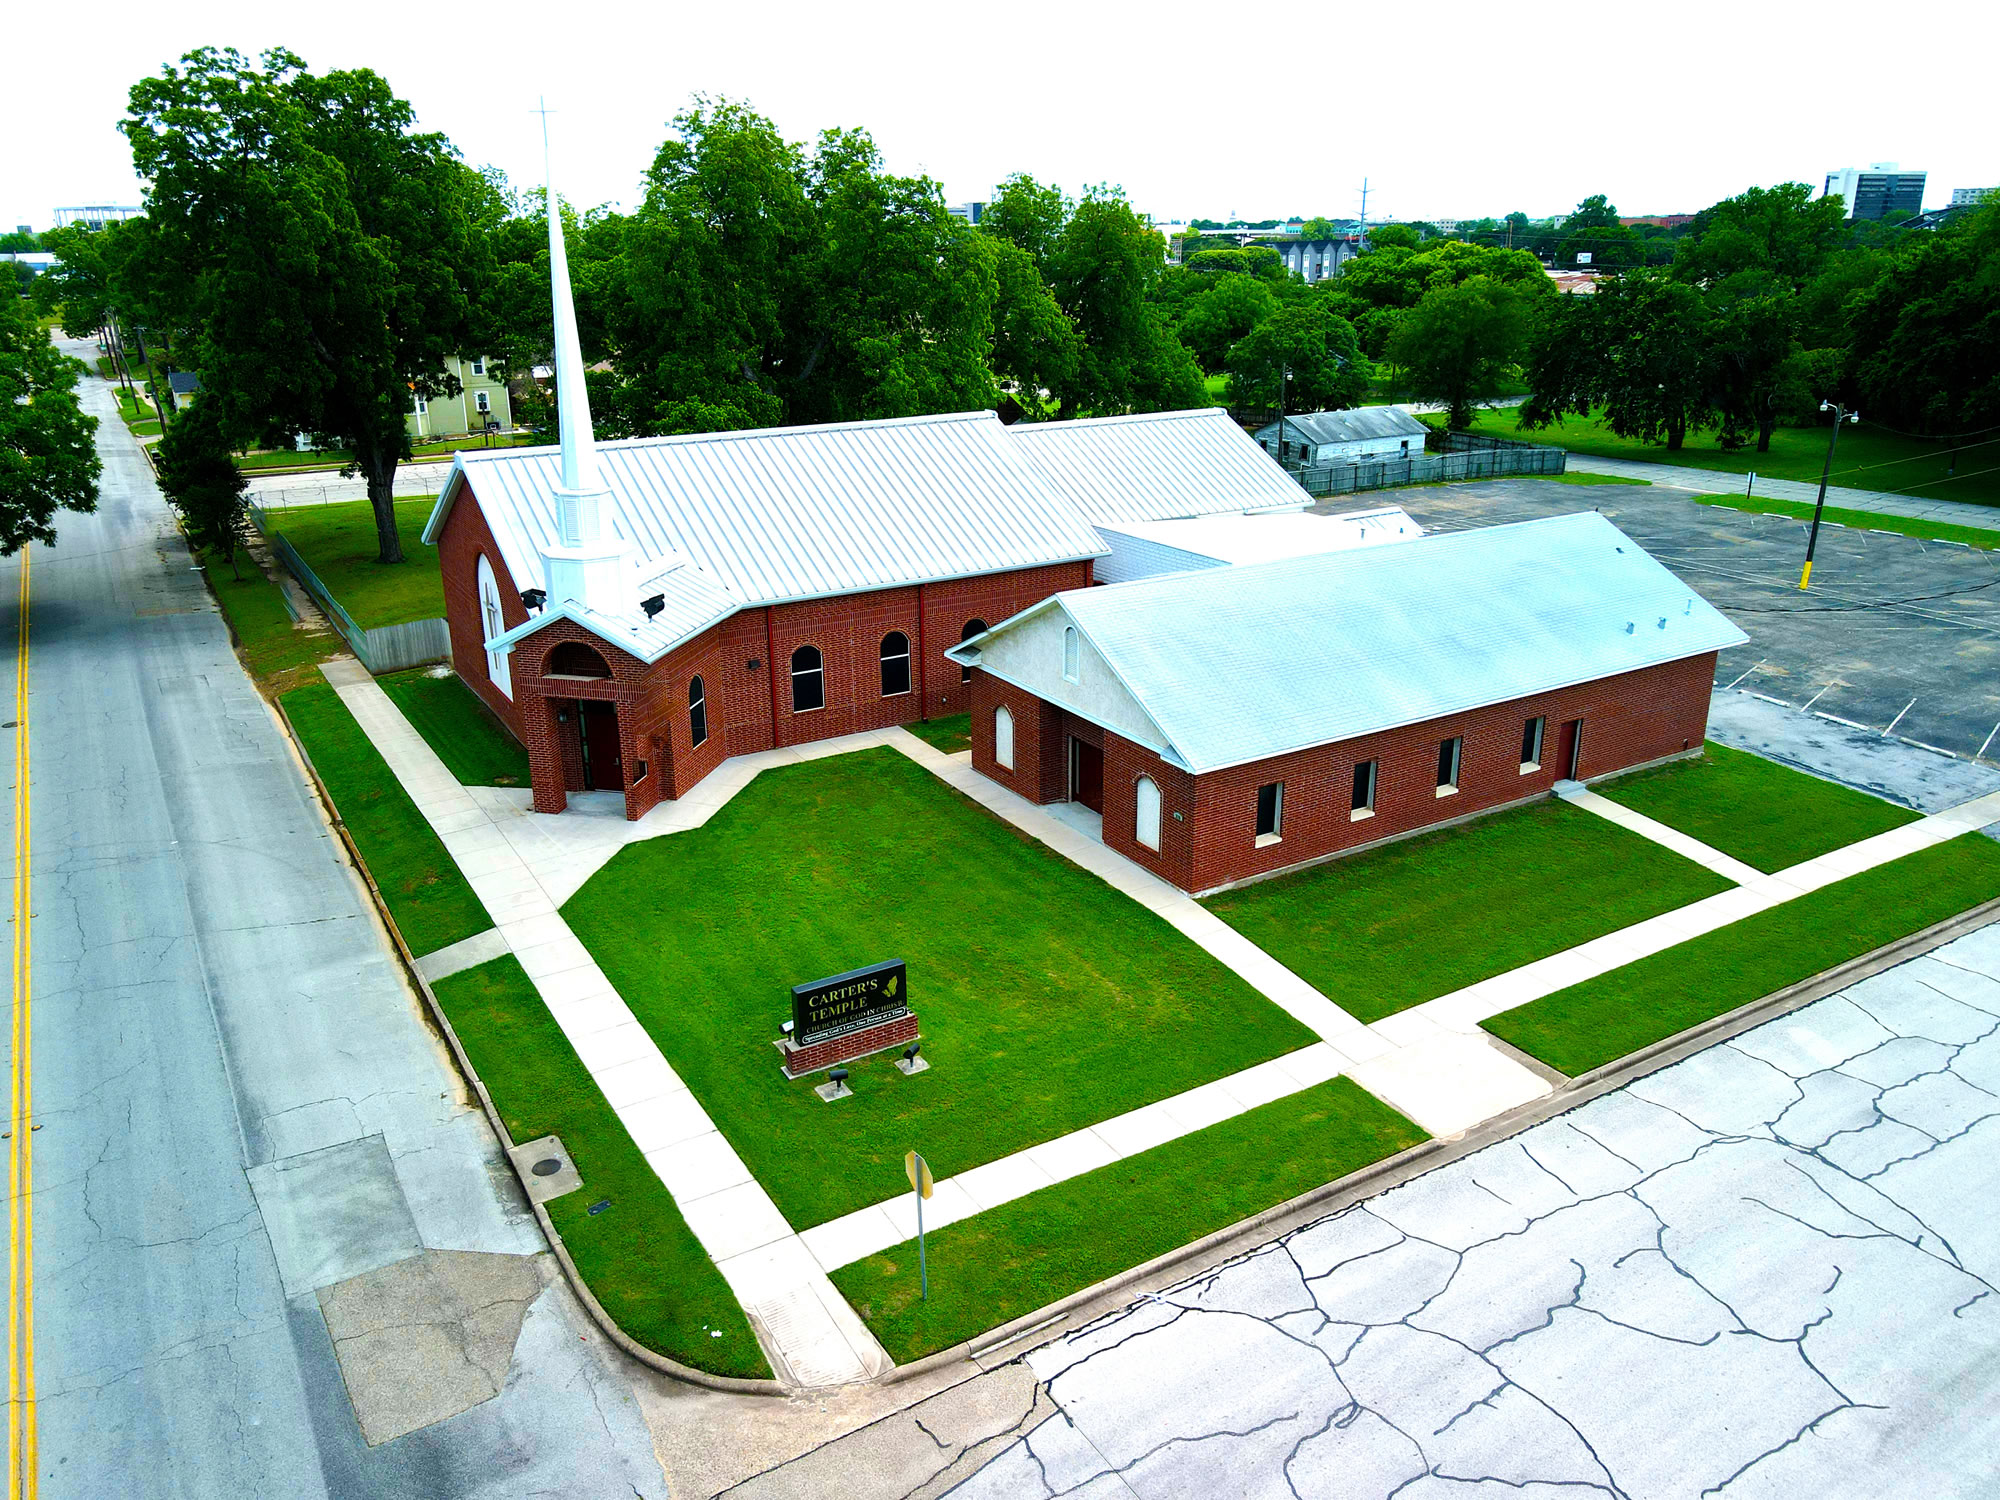 Carter's Temple Church of God in Christ Waco, Texas - Church Side